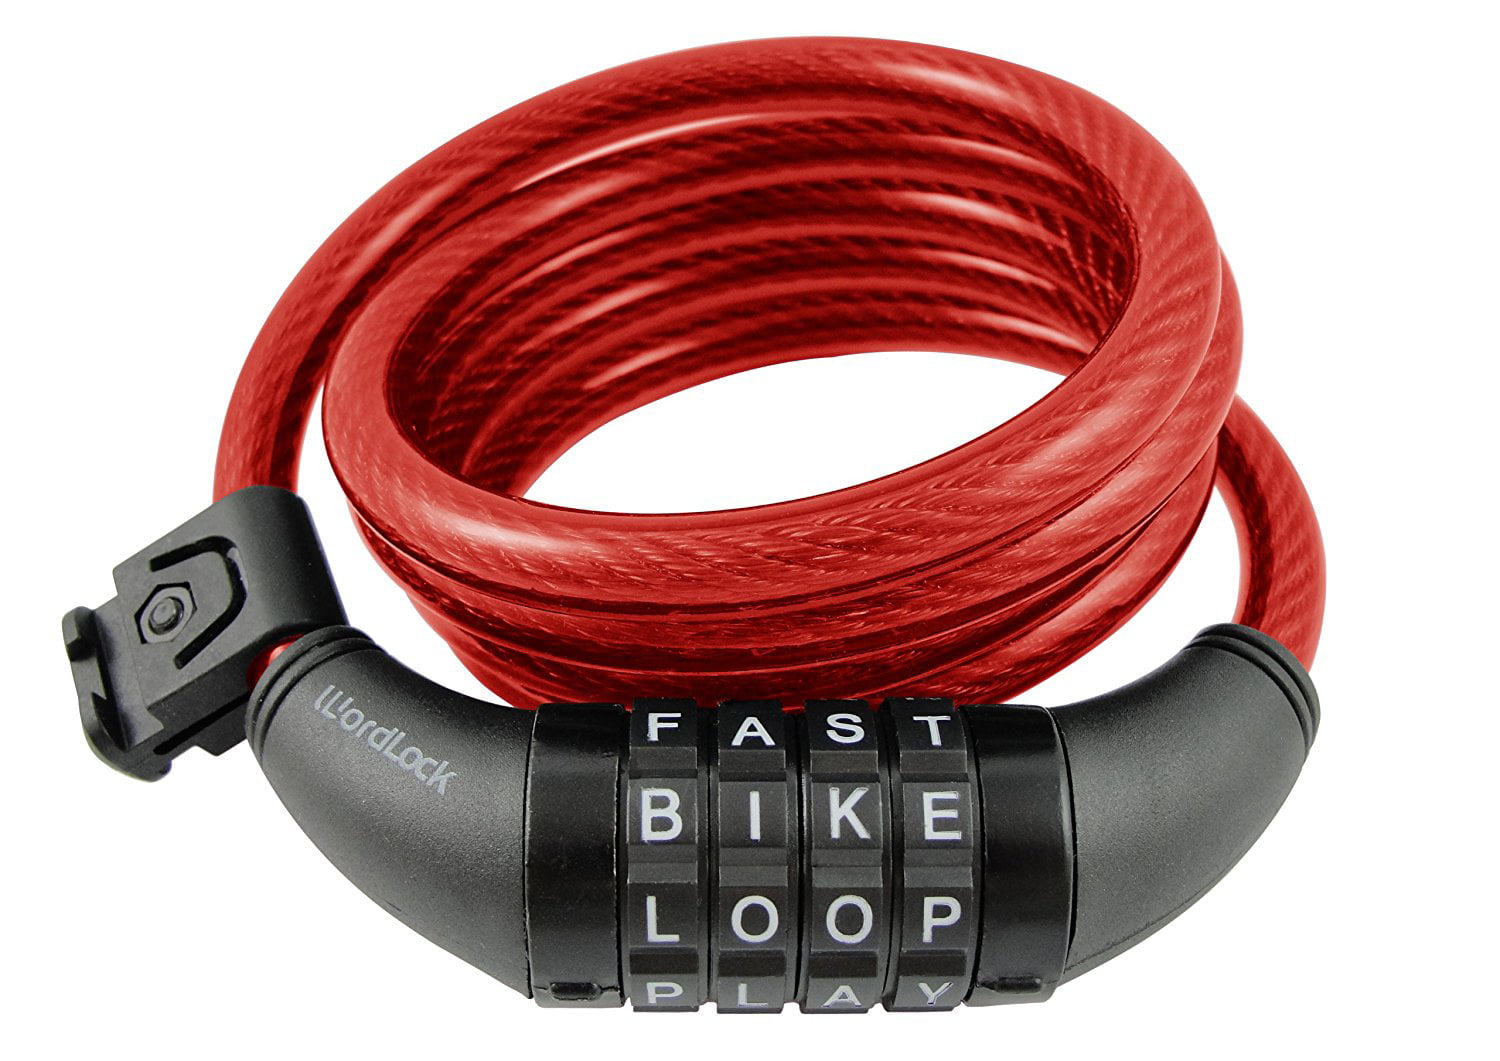 Retractable Bicycle Combination Cable Code Lock Helmet Luggage Password LocY I